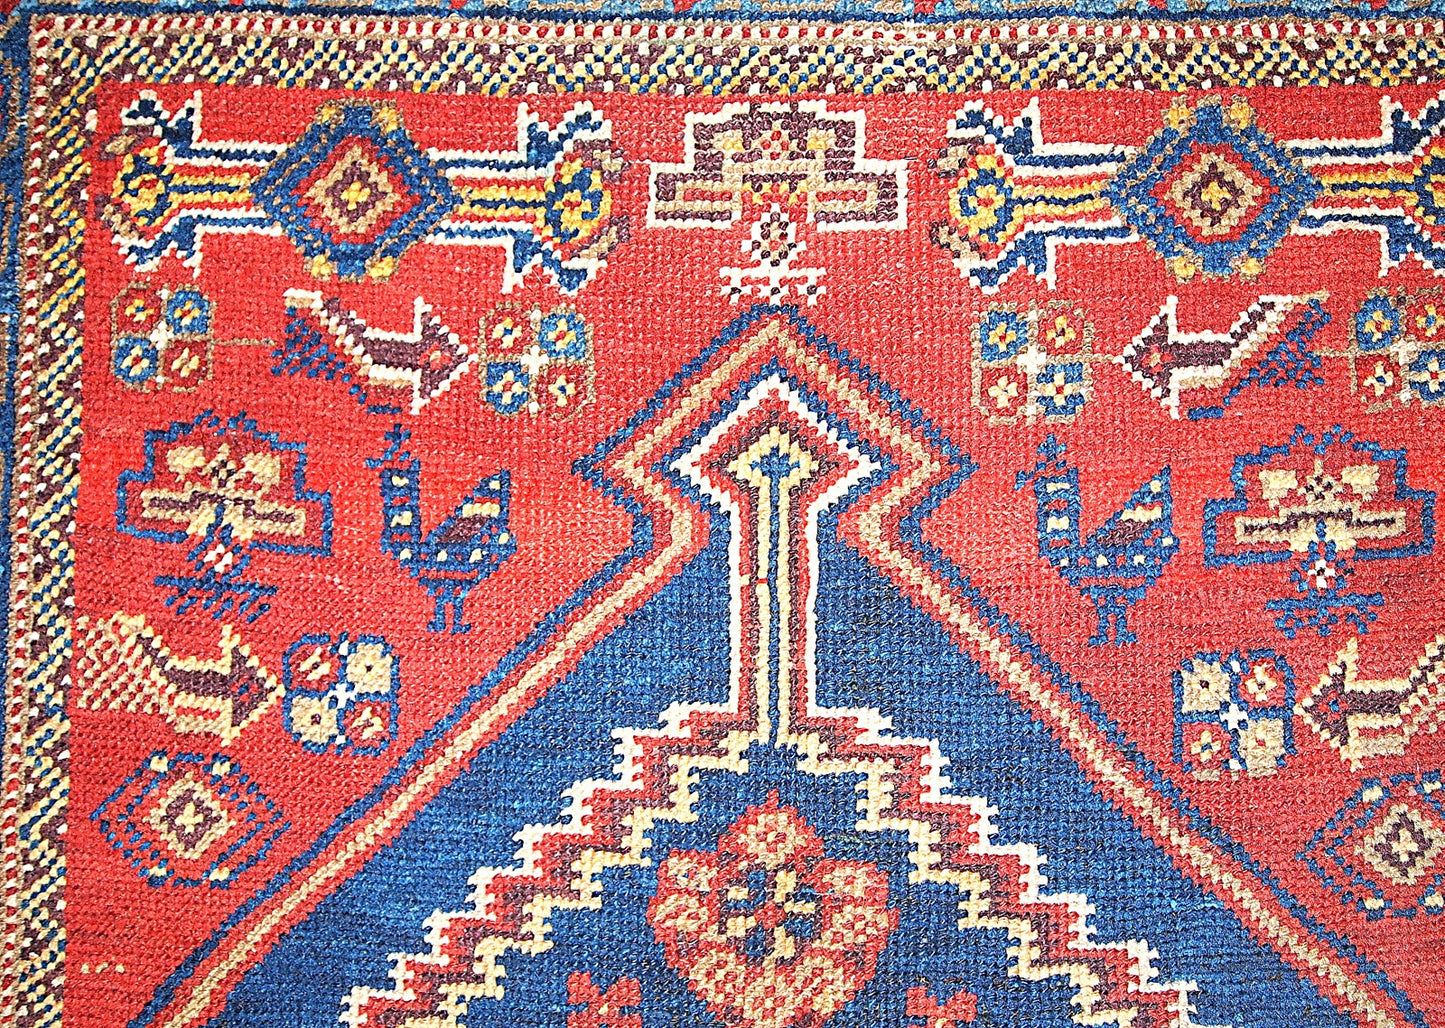 Handmade antique Persian Shiraz rug 3.2' x 5.9' (97cm x 180cm) 1920s - 1B223